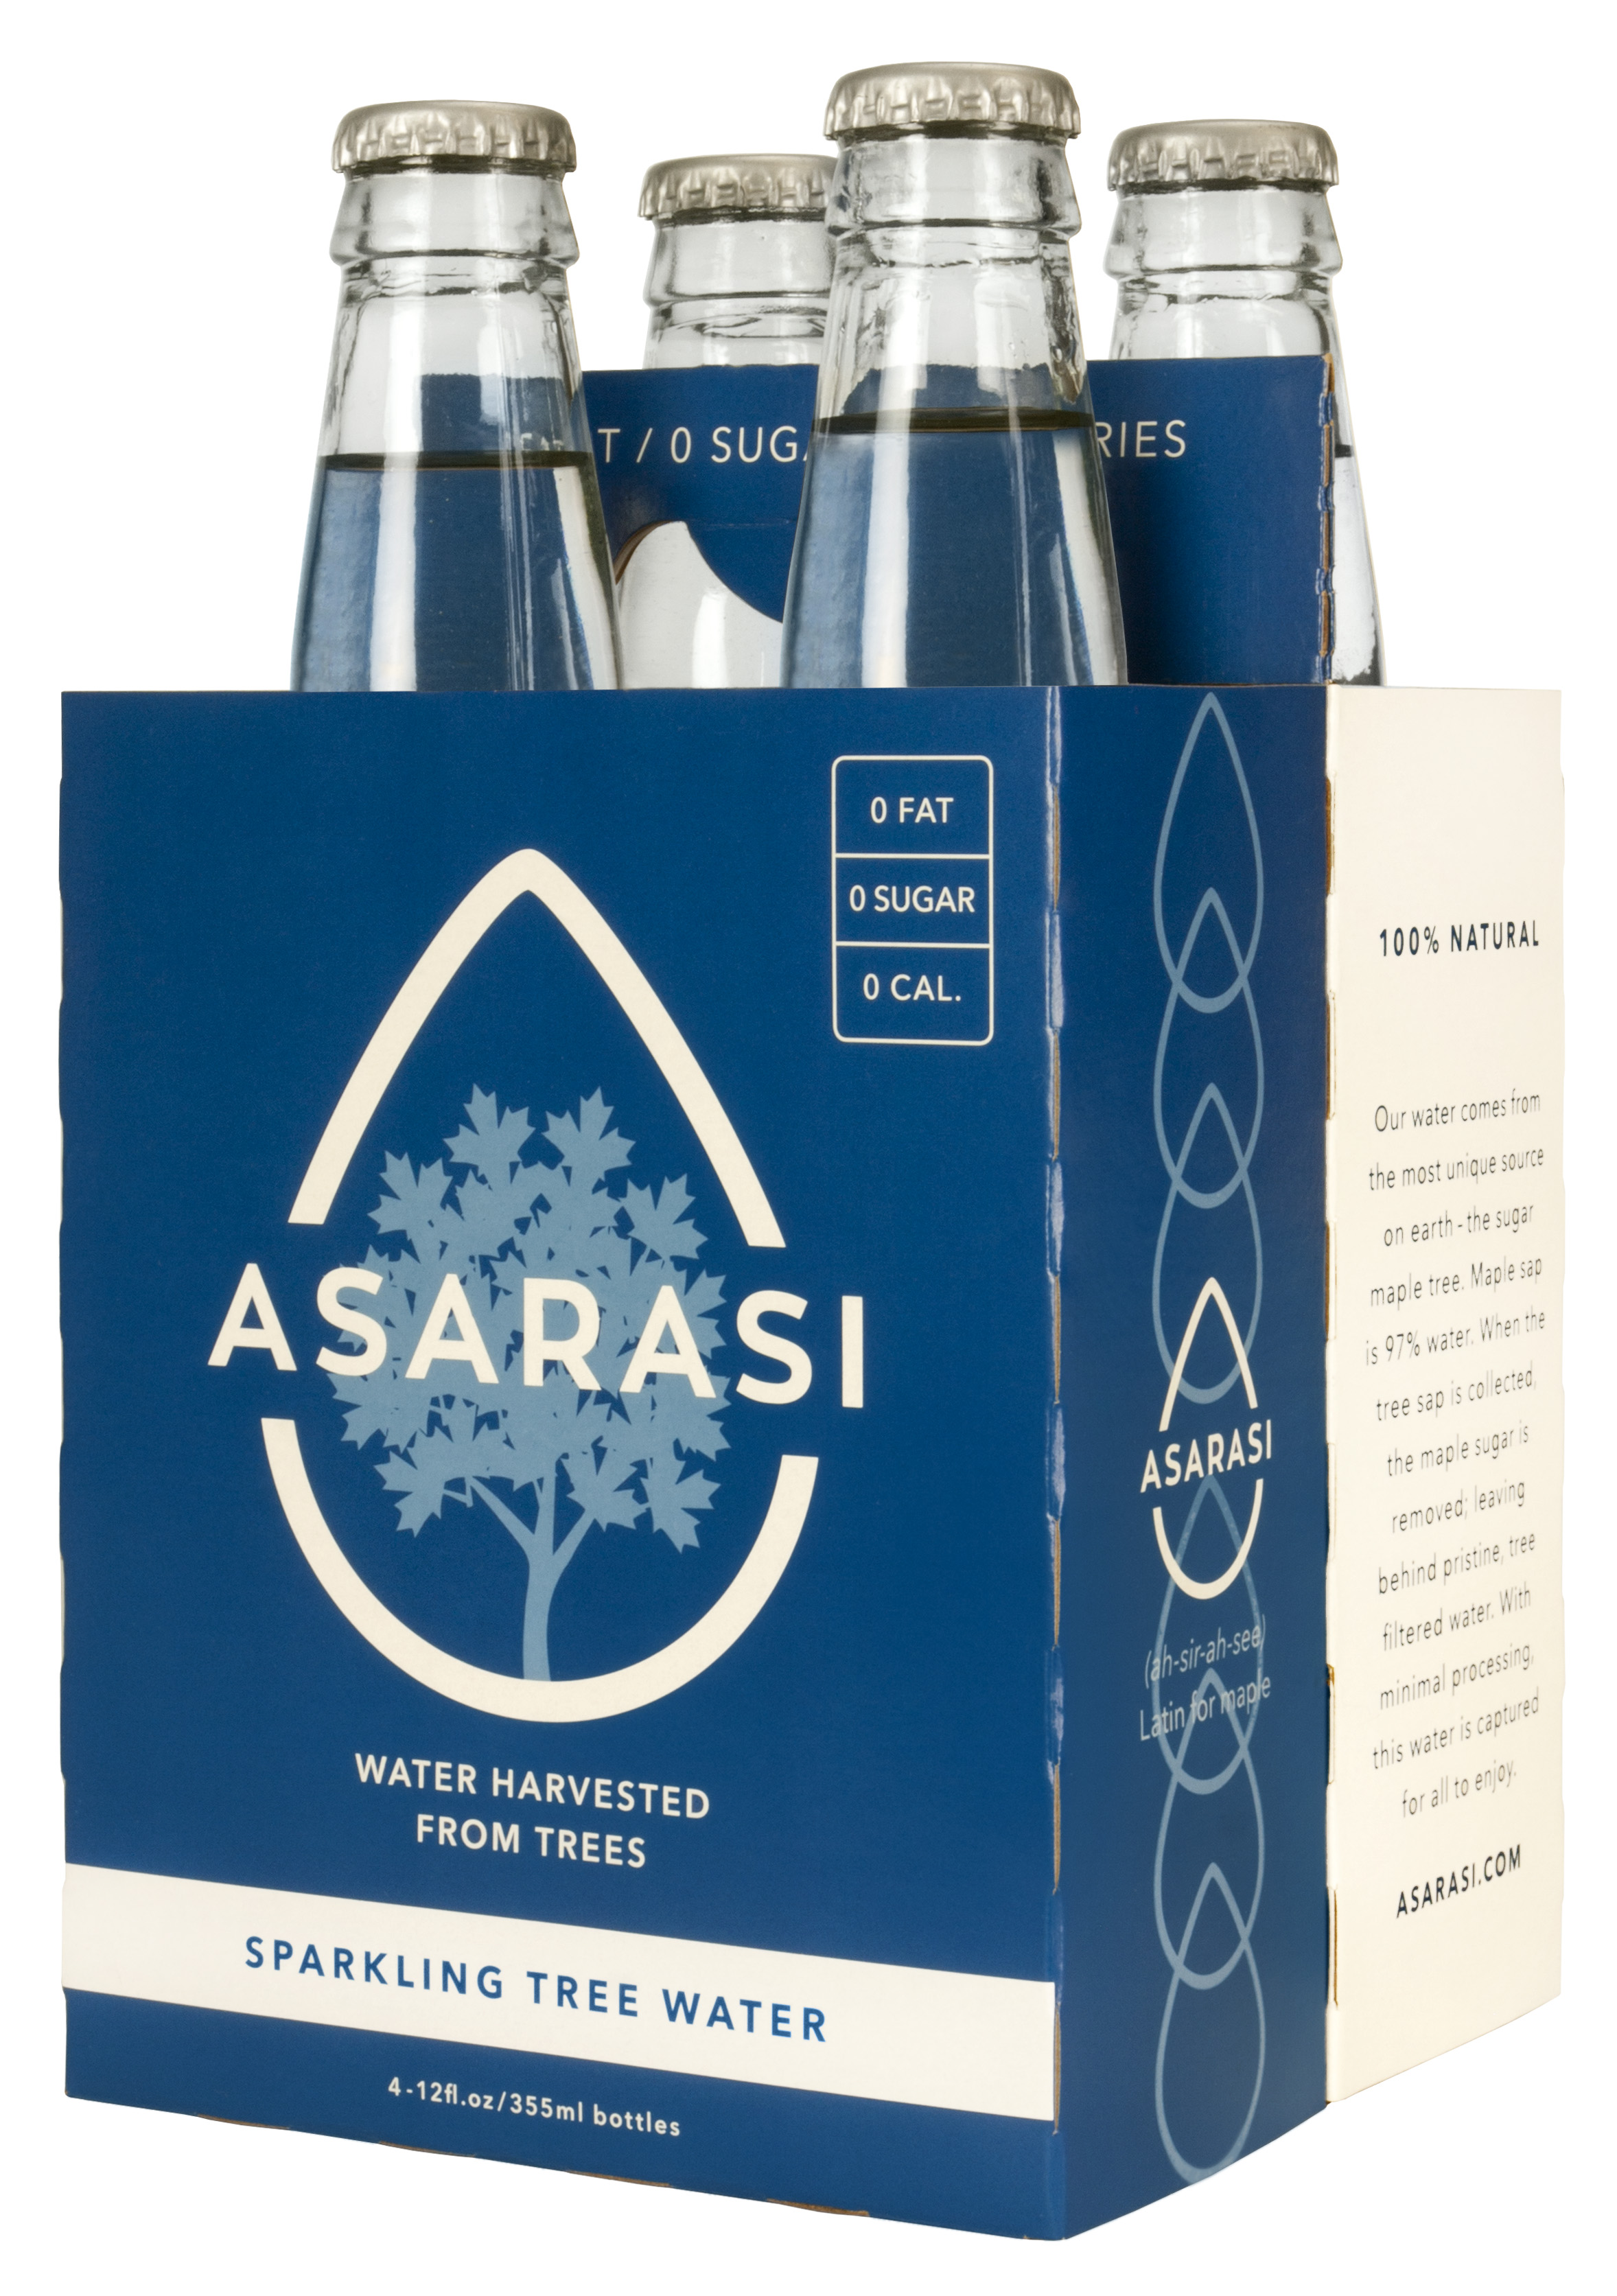 What Is Asarasi Water?